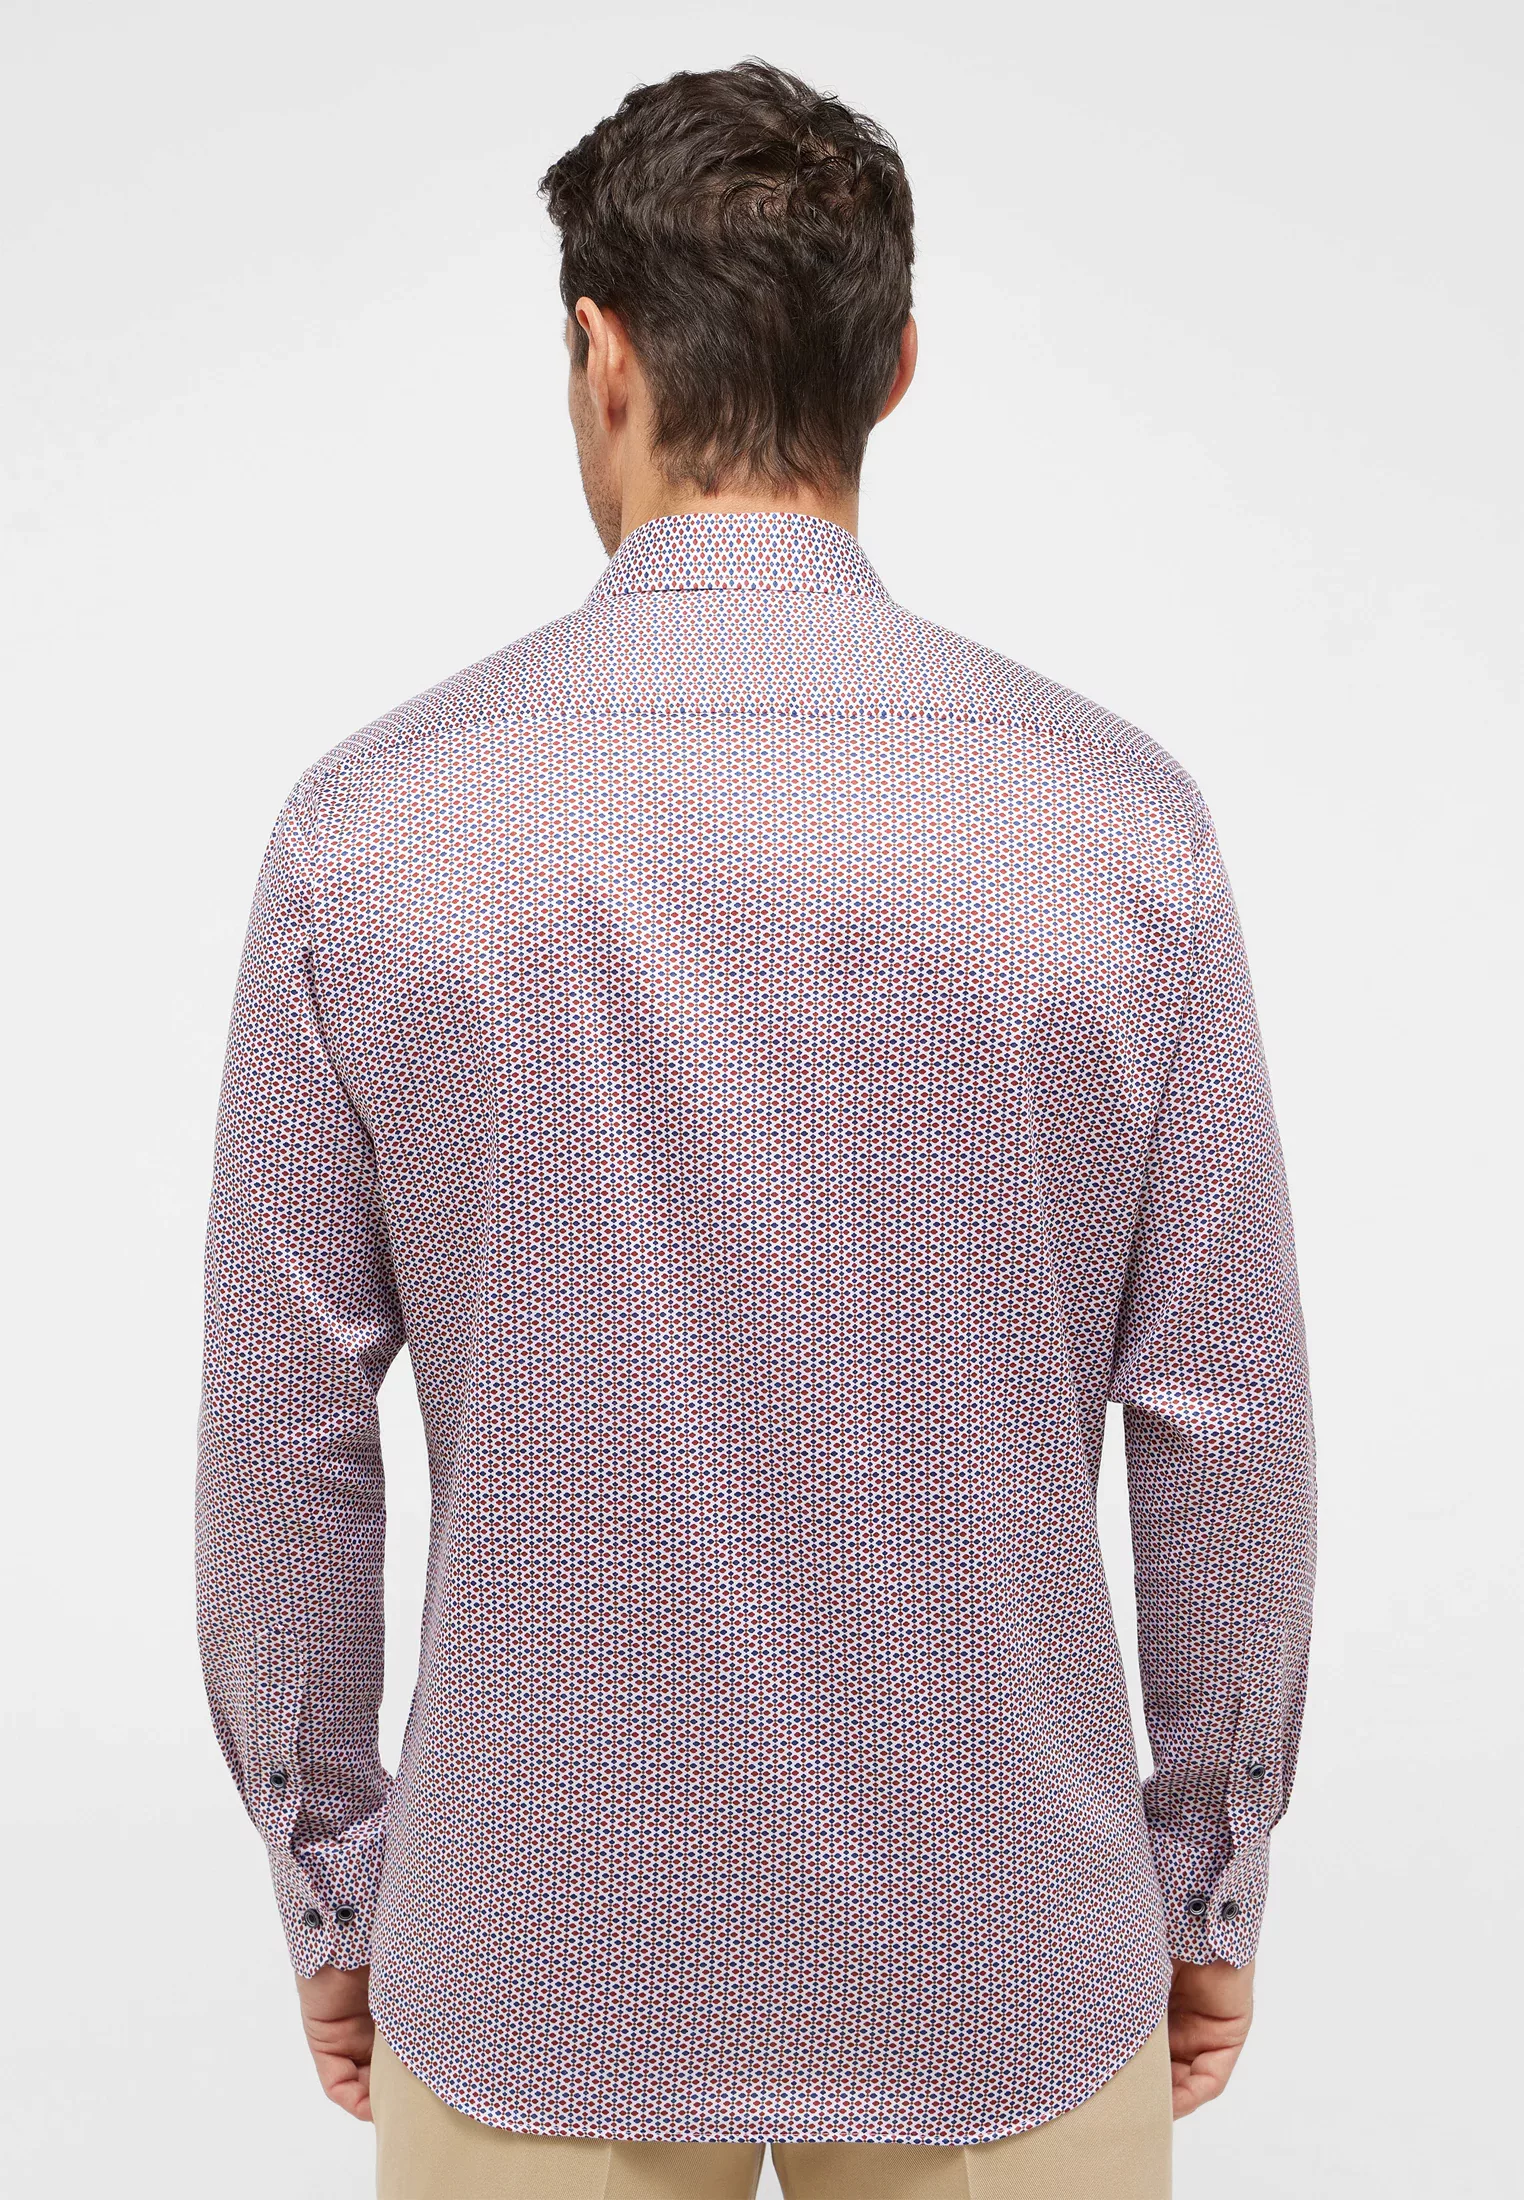 Eterna Langarmhemd - Slim Fit Hemd - minimal print - bügelfrei - Twill Lang günstig online kaufen